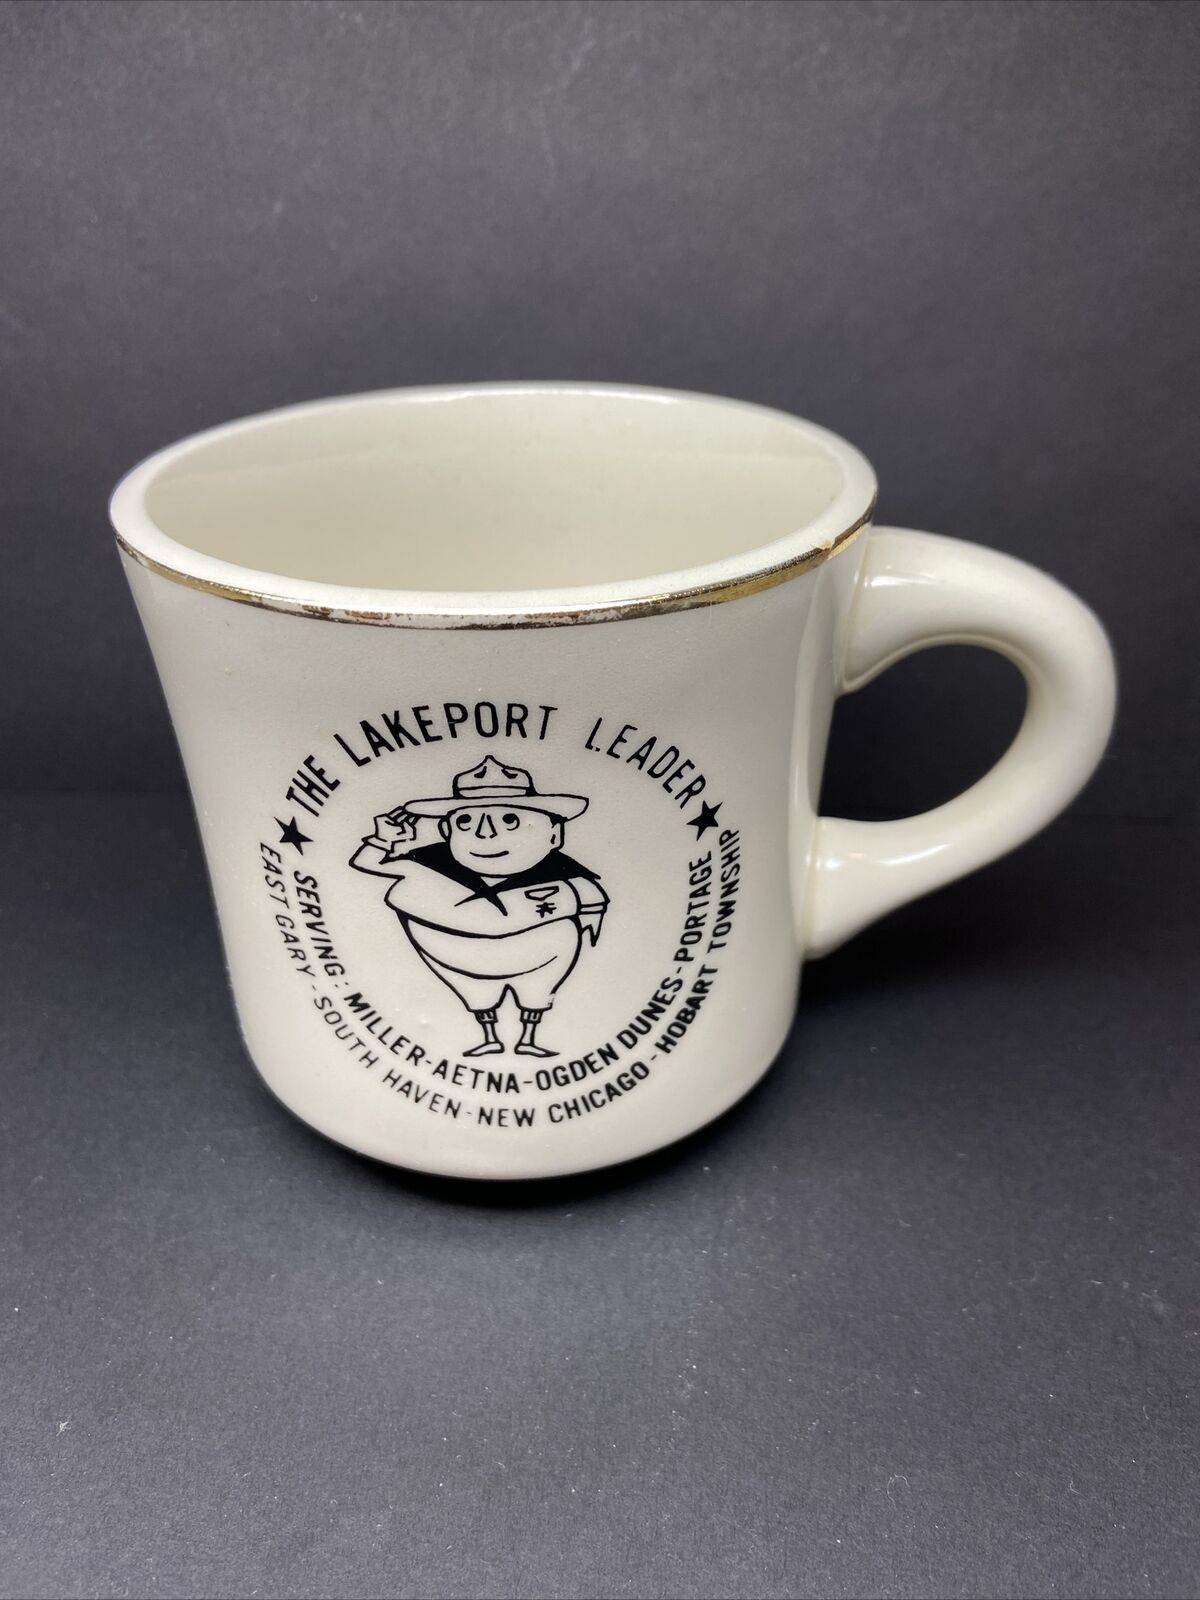 Vintage Bsa Boy Scout Lakeport Leader Mug Coffee Cup East Gary Miller In Indiana